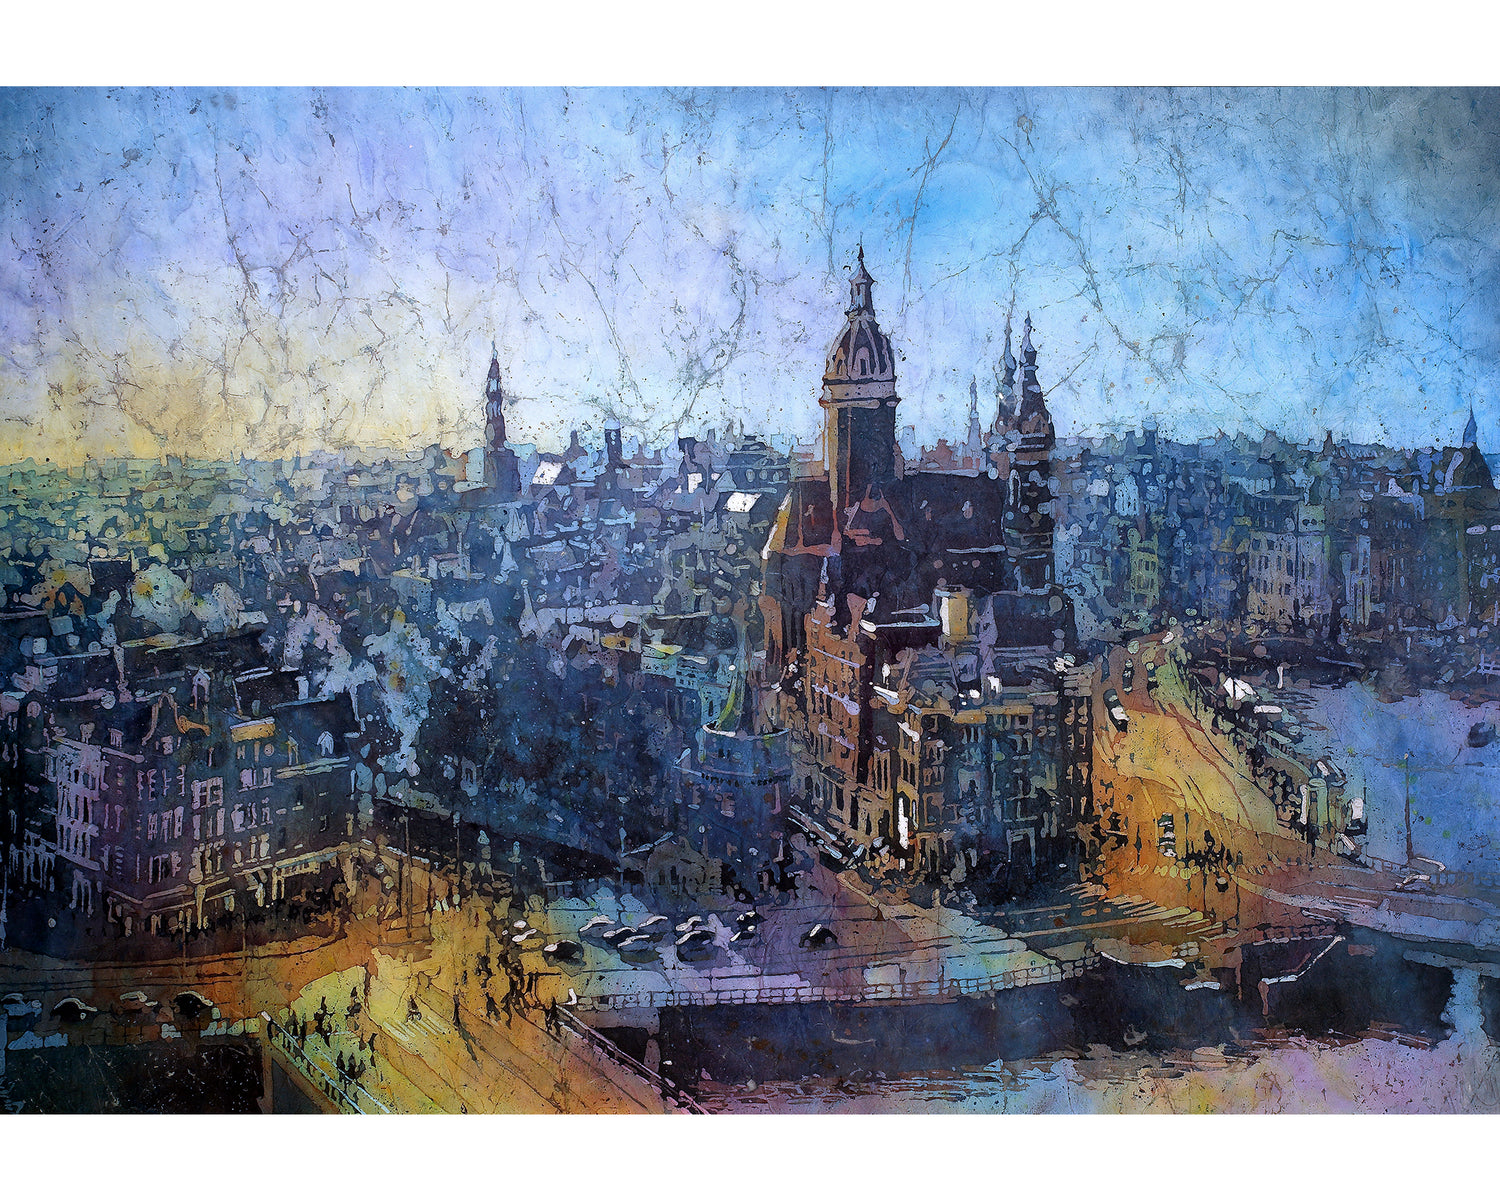 Original watercolor batik painting of Amsterdam, Netherlands skyline.  Original painting and prints available